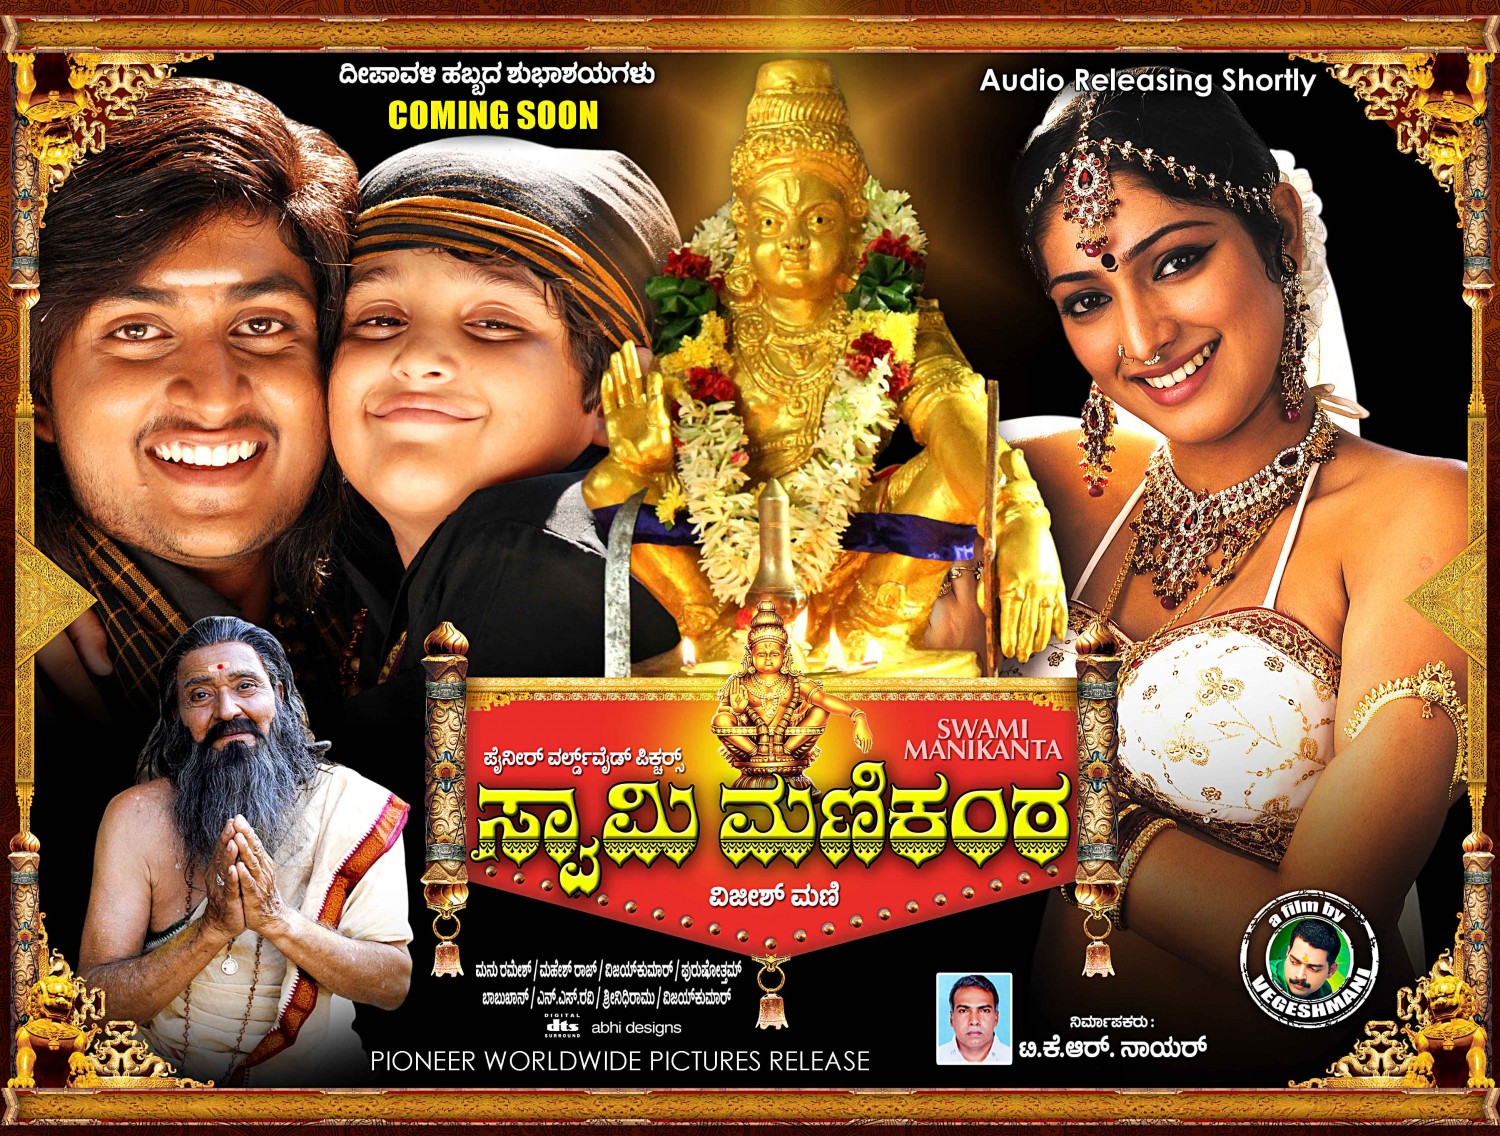 Extra Large Movie Poster Image for Swami Manikanta 